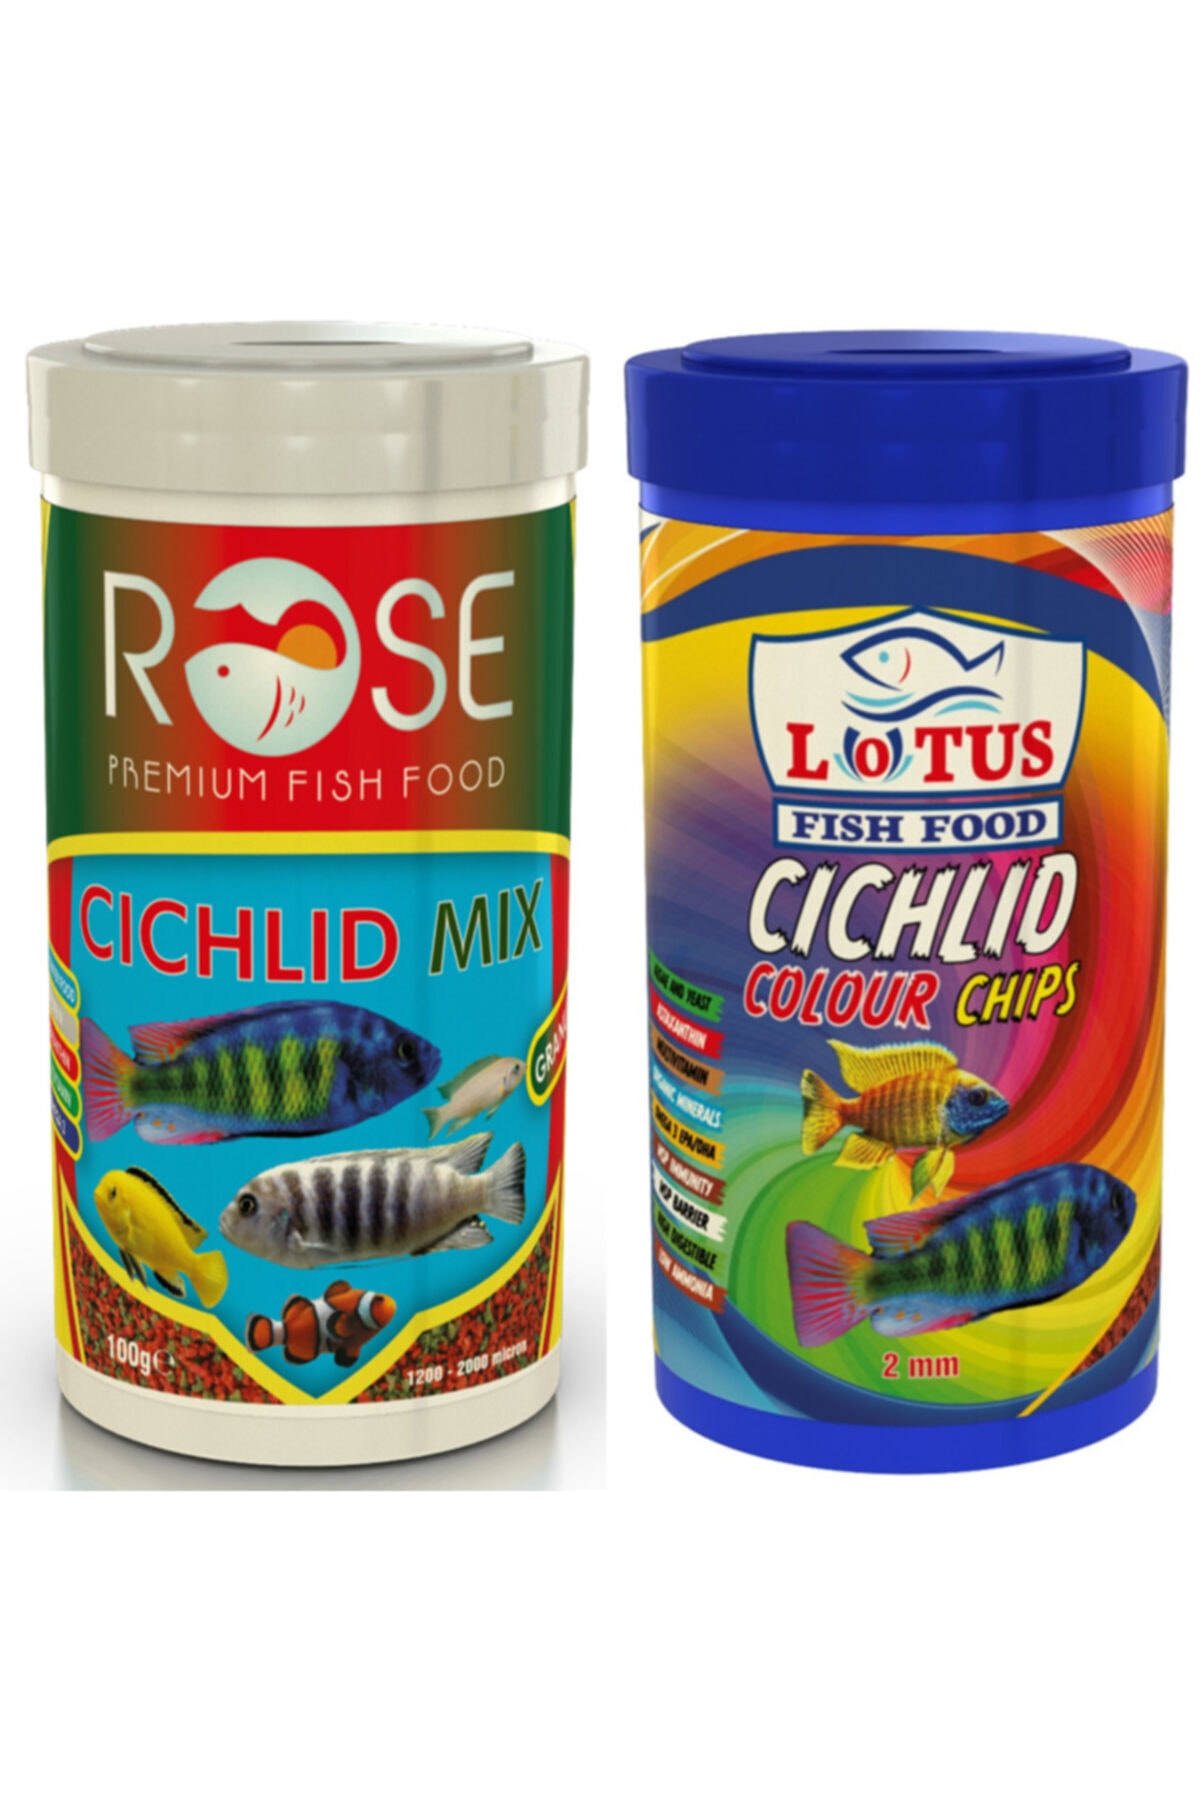 Lotus Cichlid Colour Chips Renklendirici 250 Ml Ve Rose Cichlid Mix 250 Ml Balık Yemi